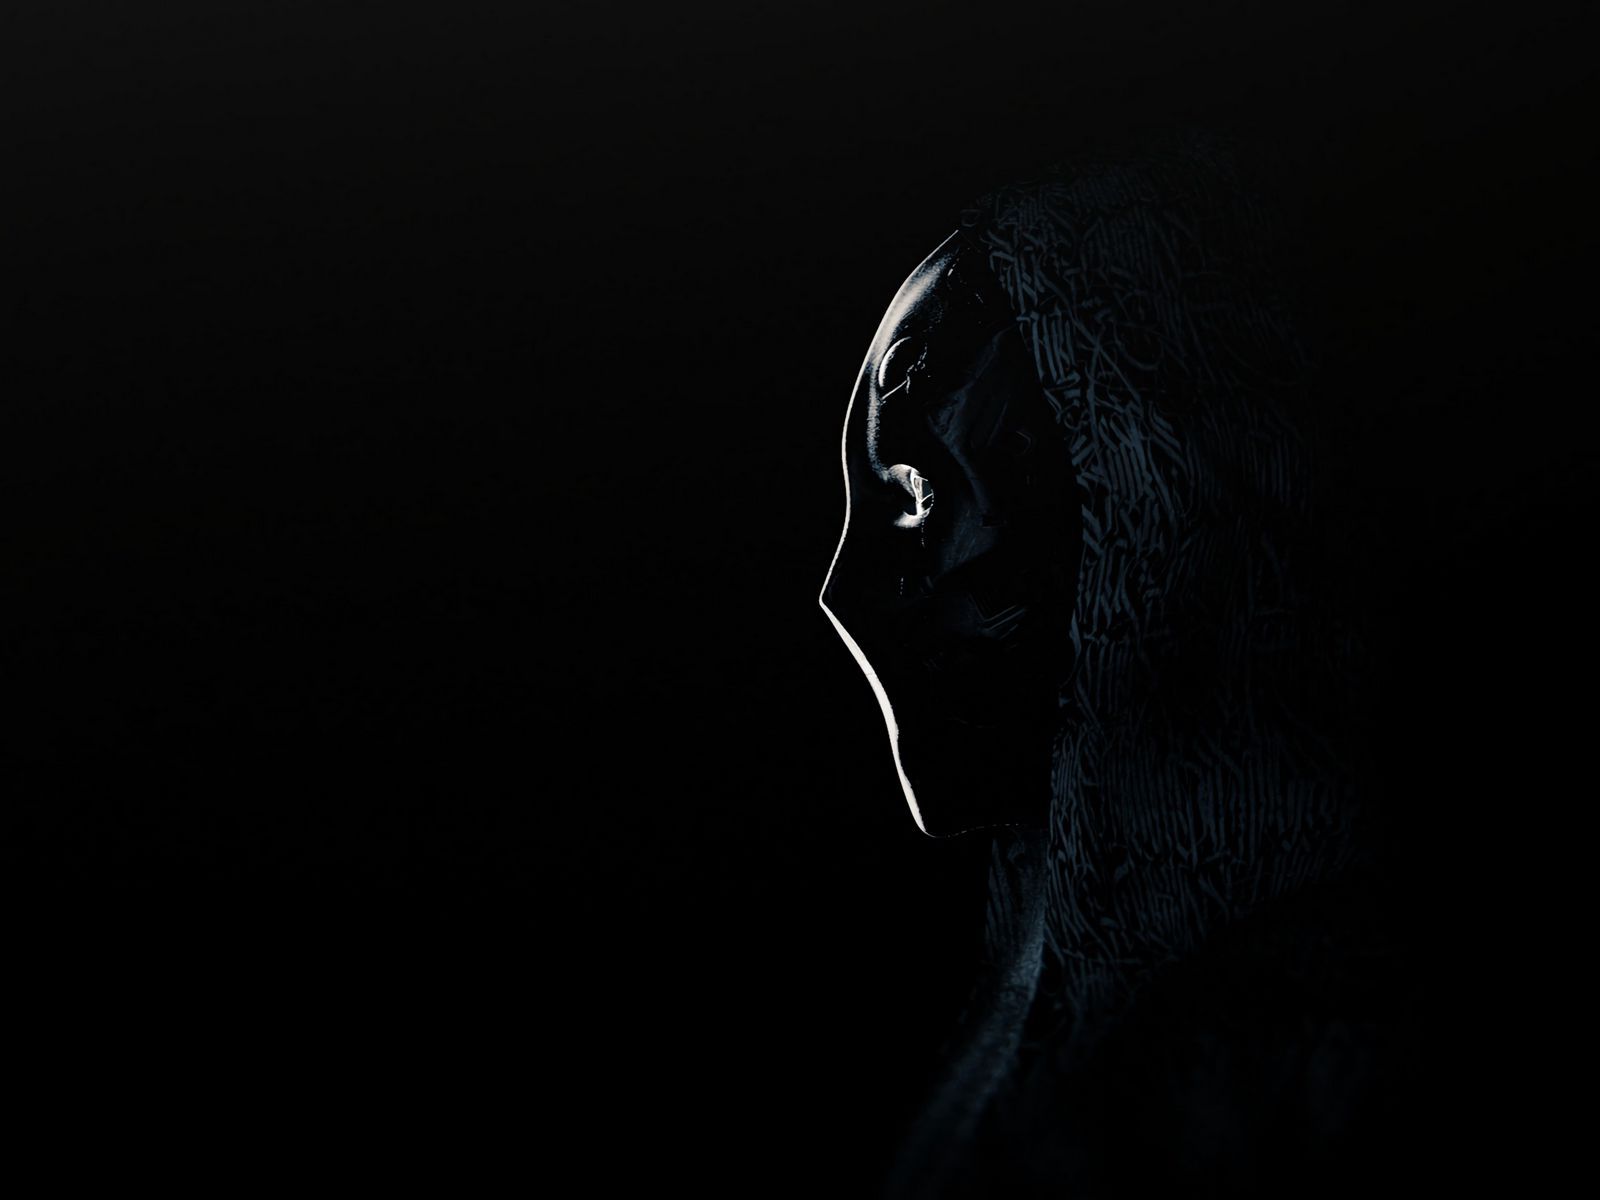 Download wallpaper 1600x1200 anonymous, mask, profile, dark standard 4:3 HD background